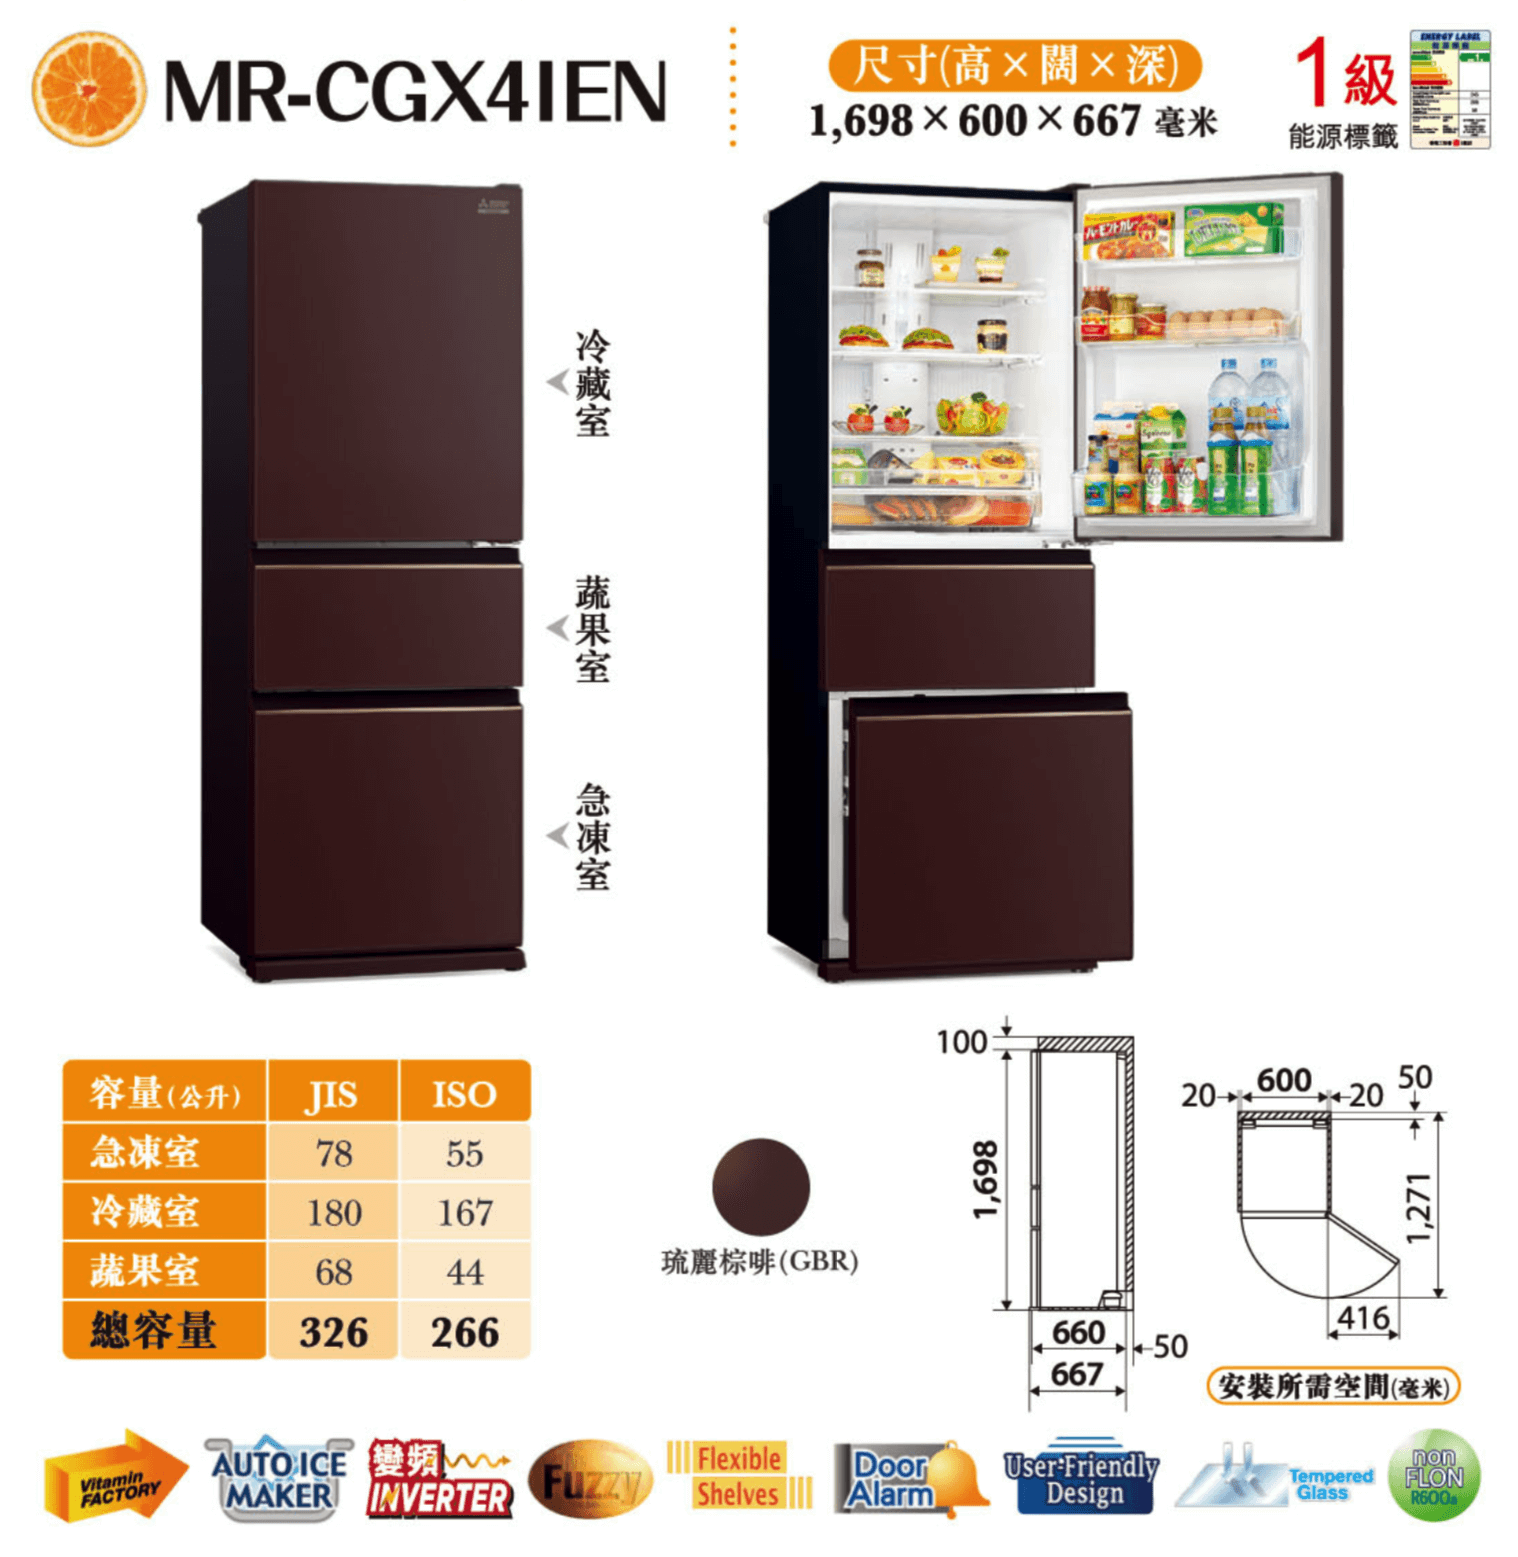 Mitsubishi MR-CGX41EN-GBR 266L 3-door Refrigerator